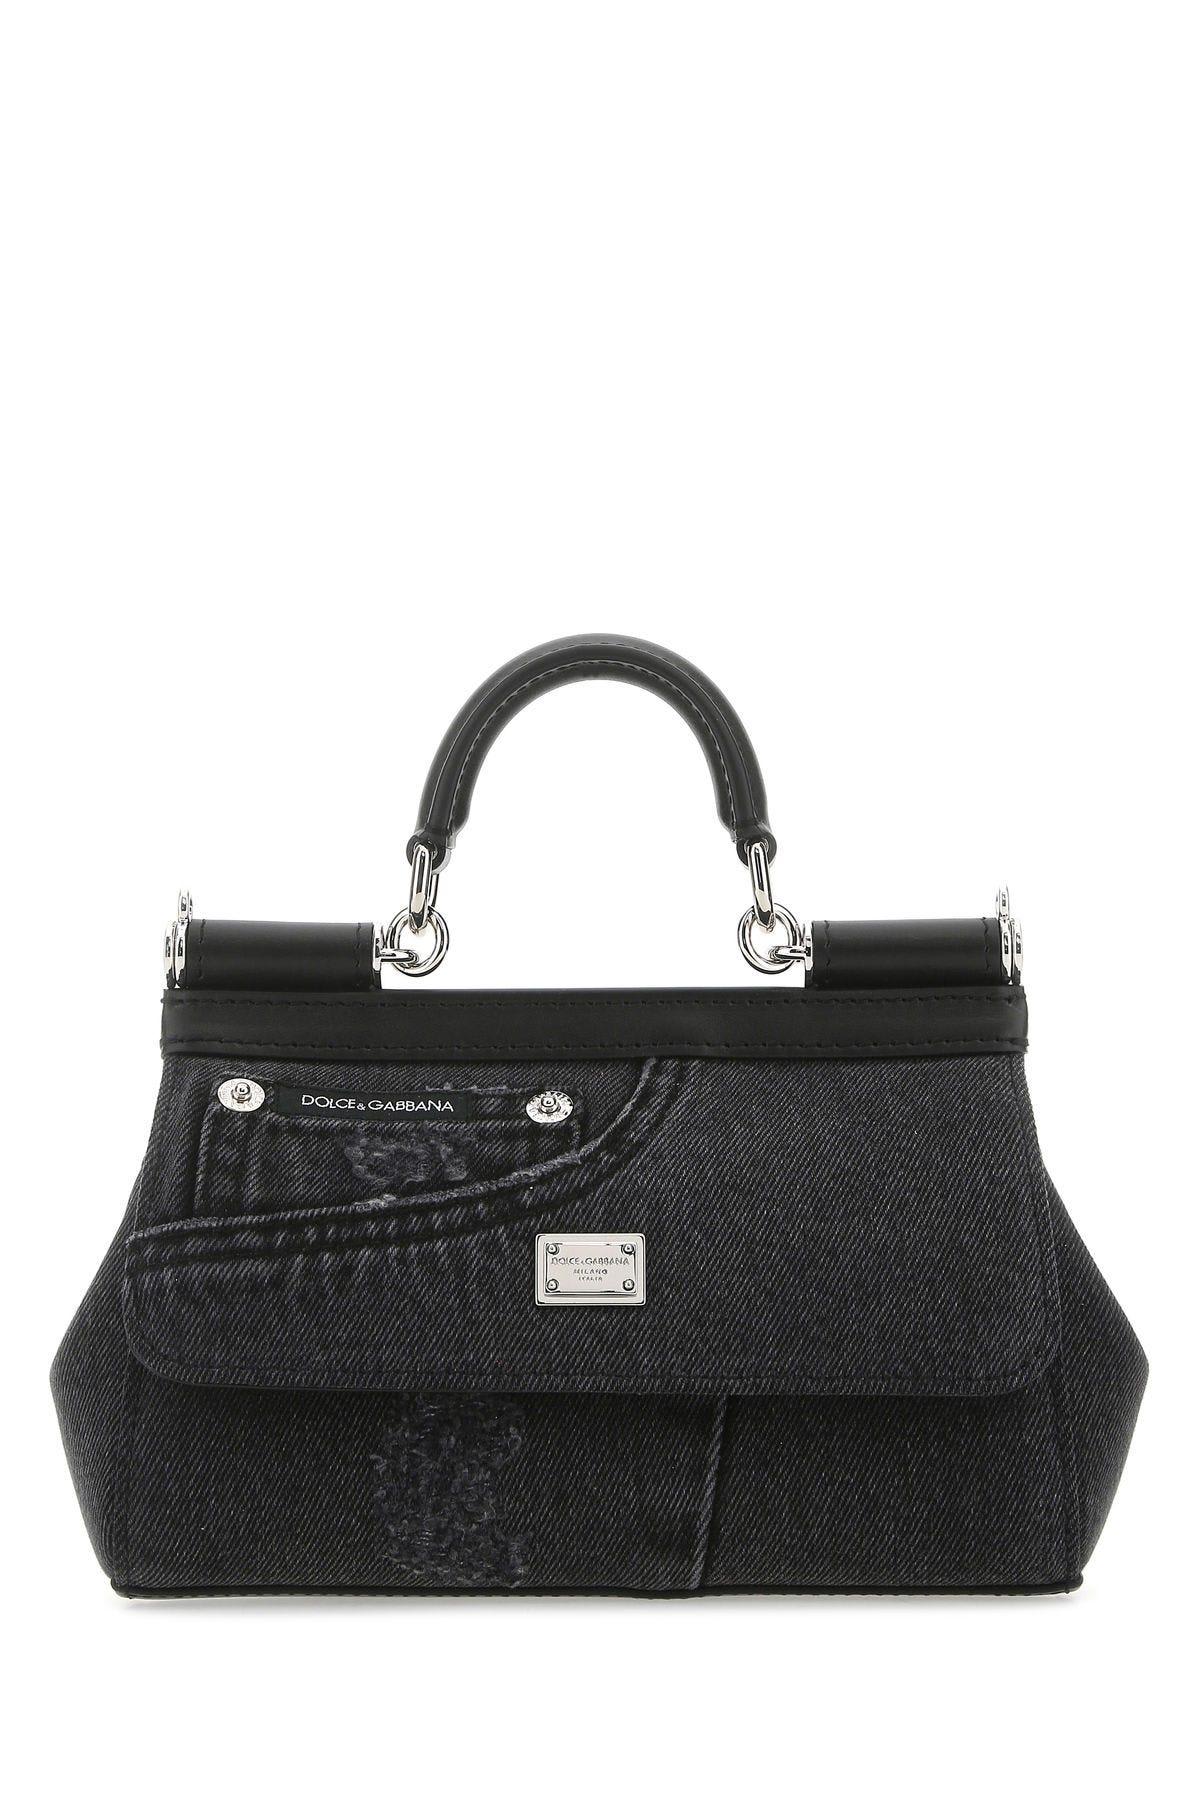 Dolce & Gabbana Black Leather And Denim Small Sicily Handbag